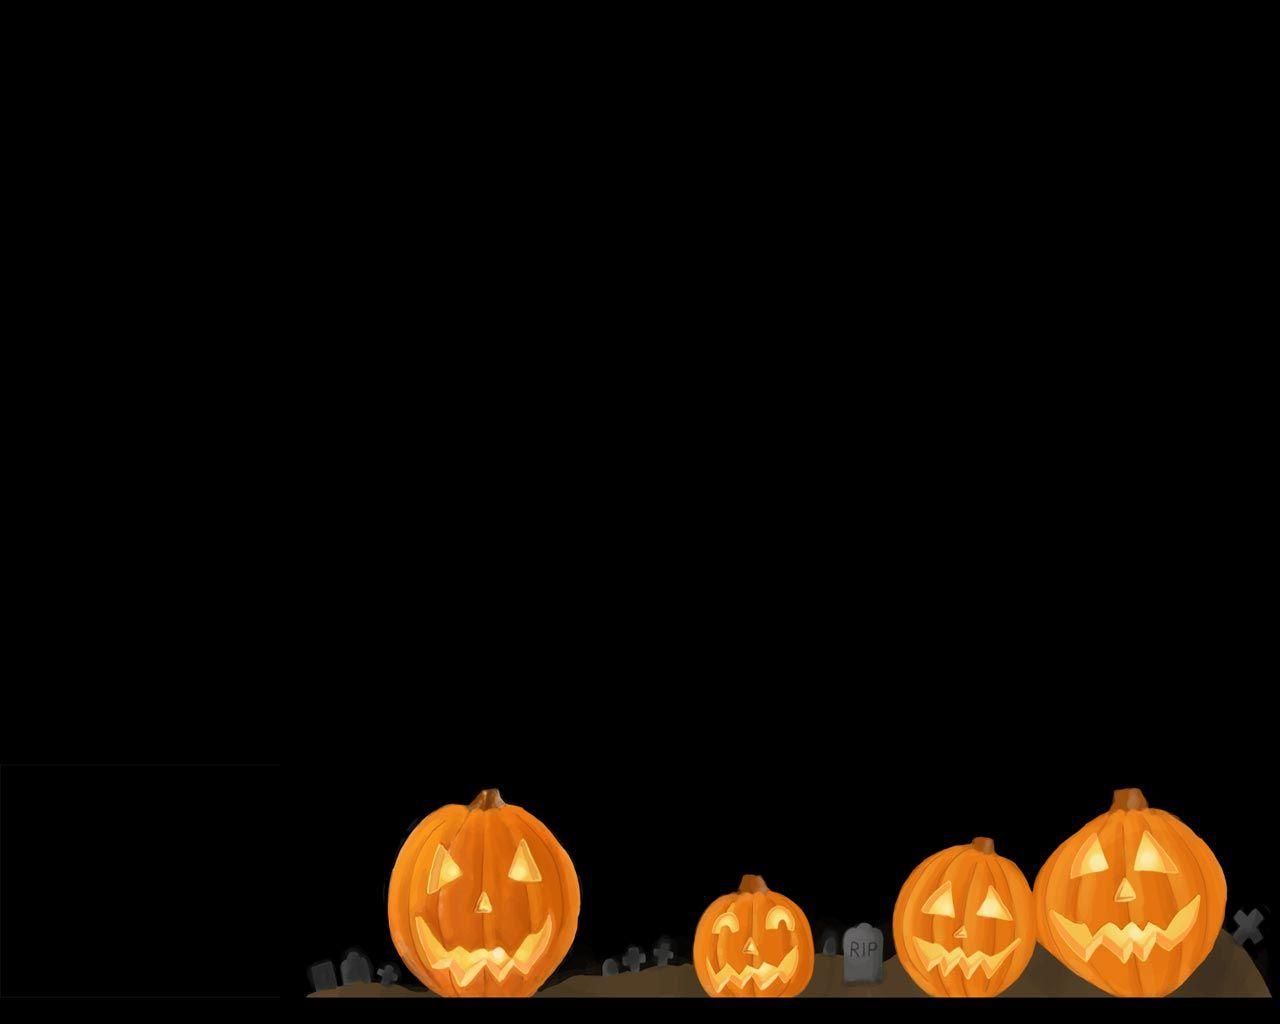 Cool Halloween Backgrounds Design Ideas ~ Halloween Backgrounds